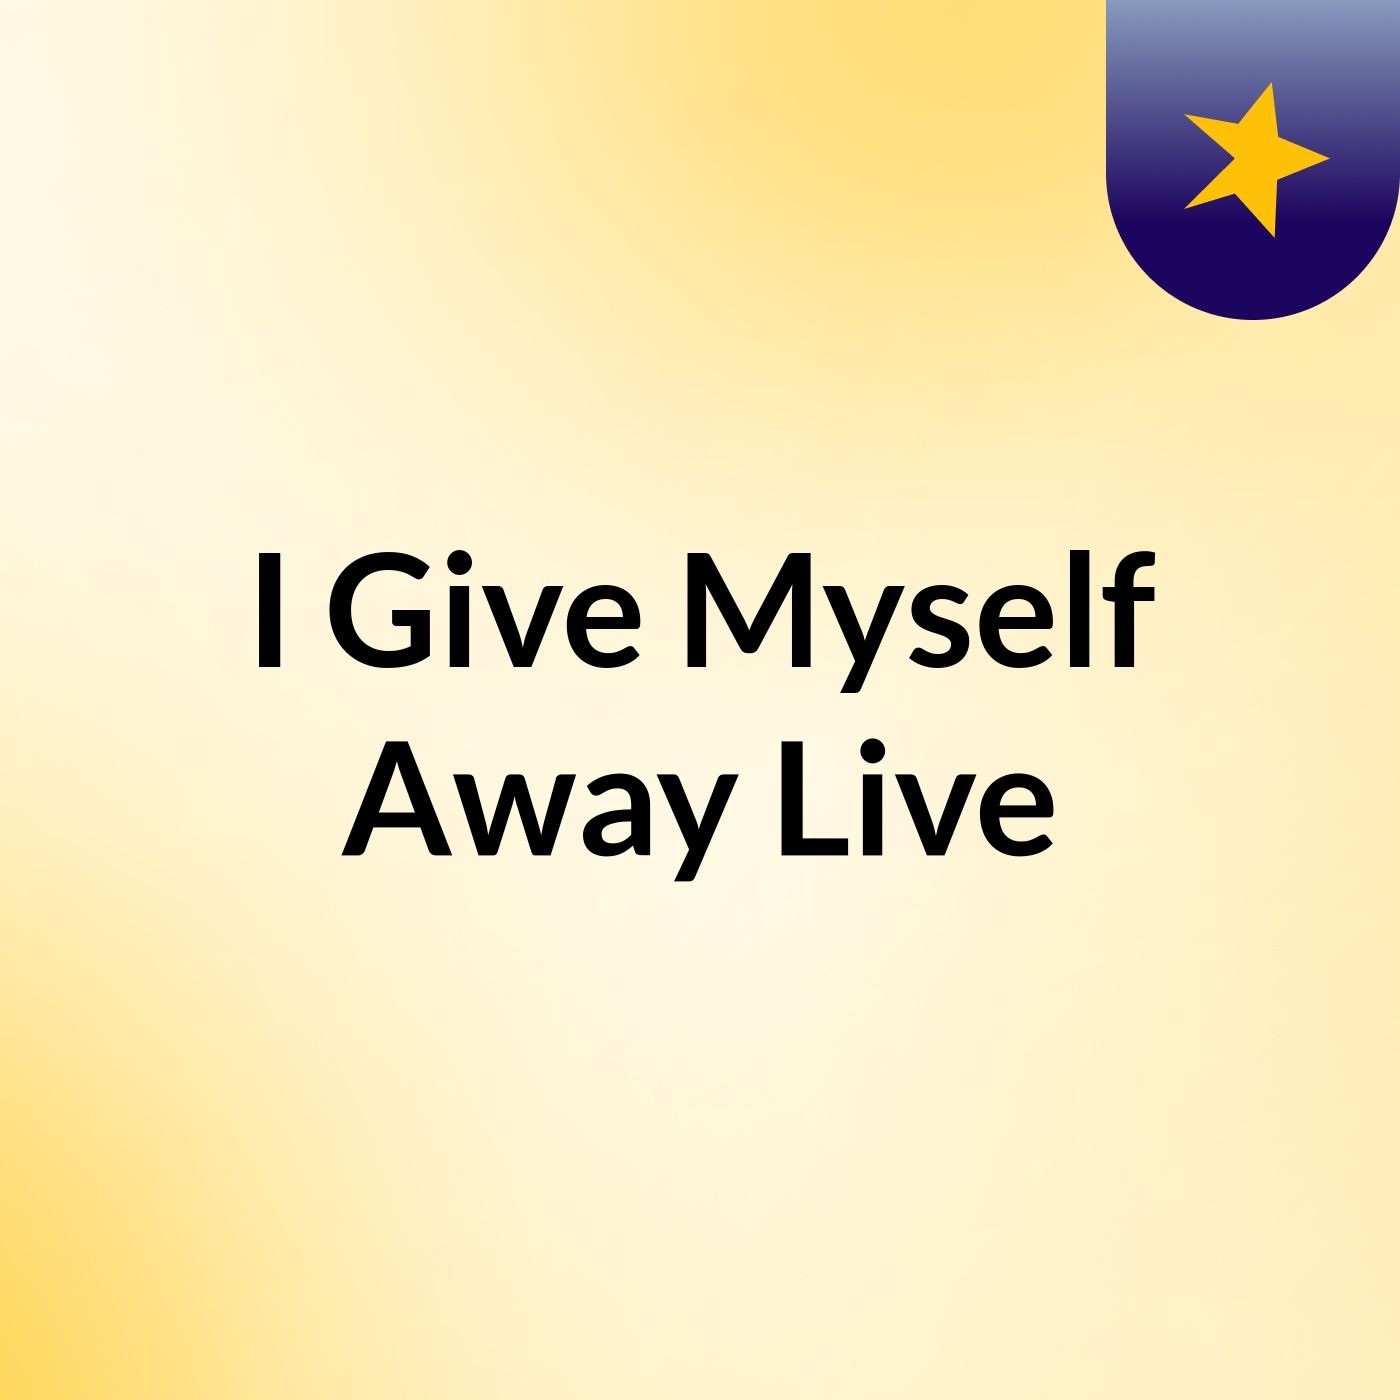 I Give Myself Away Live